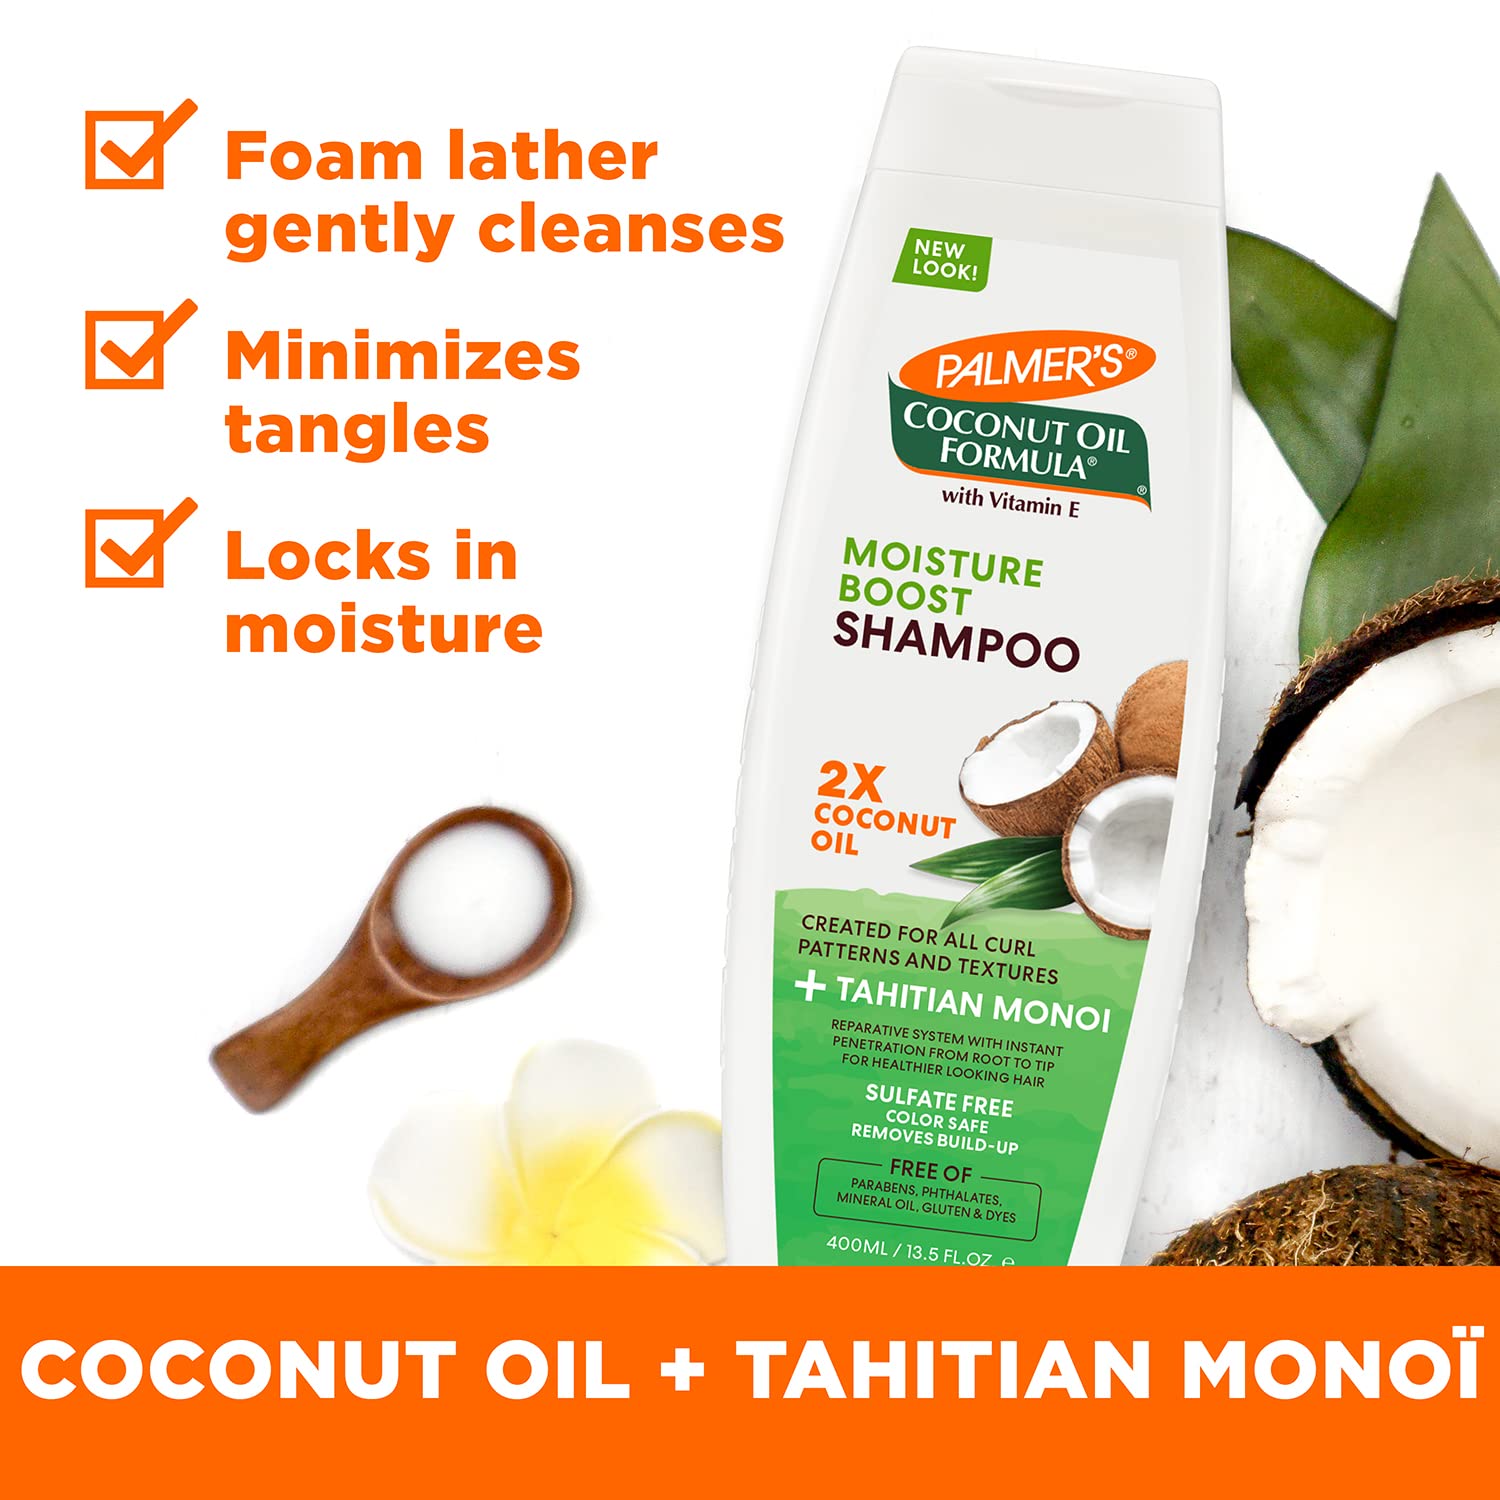 Palmer's Coconut Oil Formula Moisture Boost Shampoo-400ml